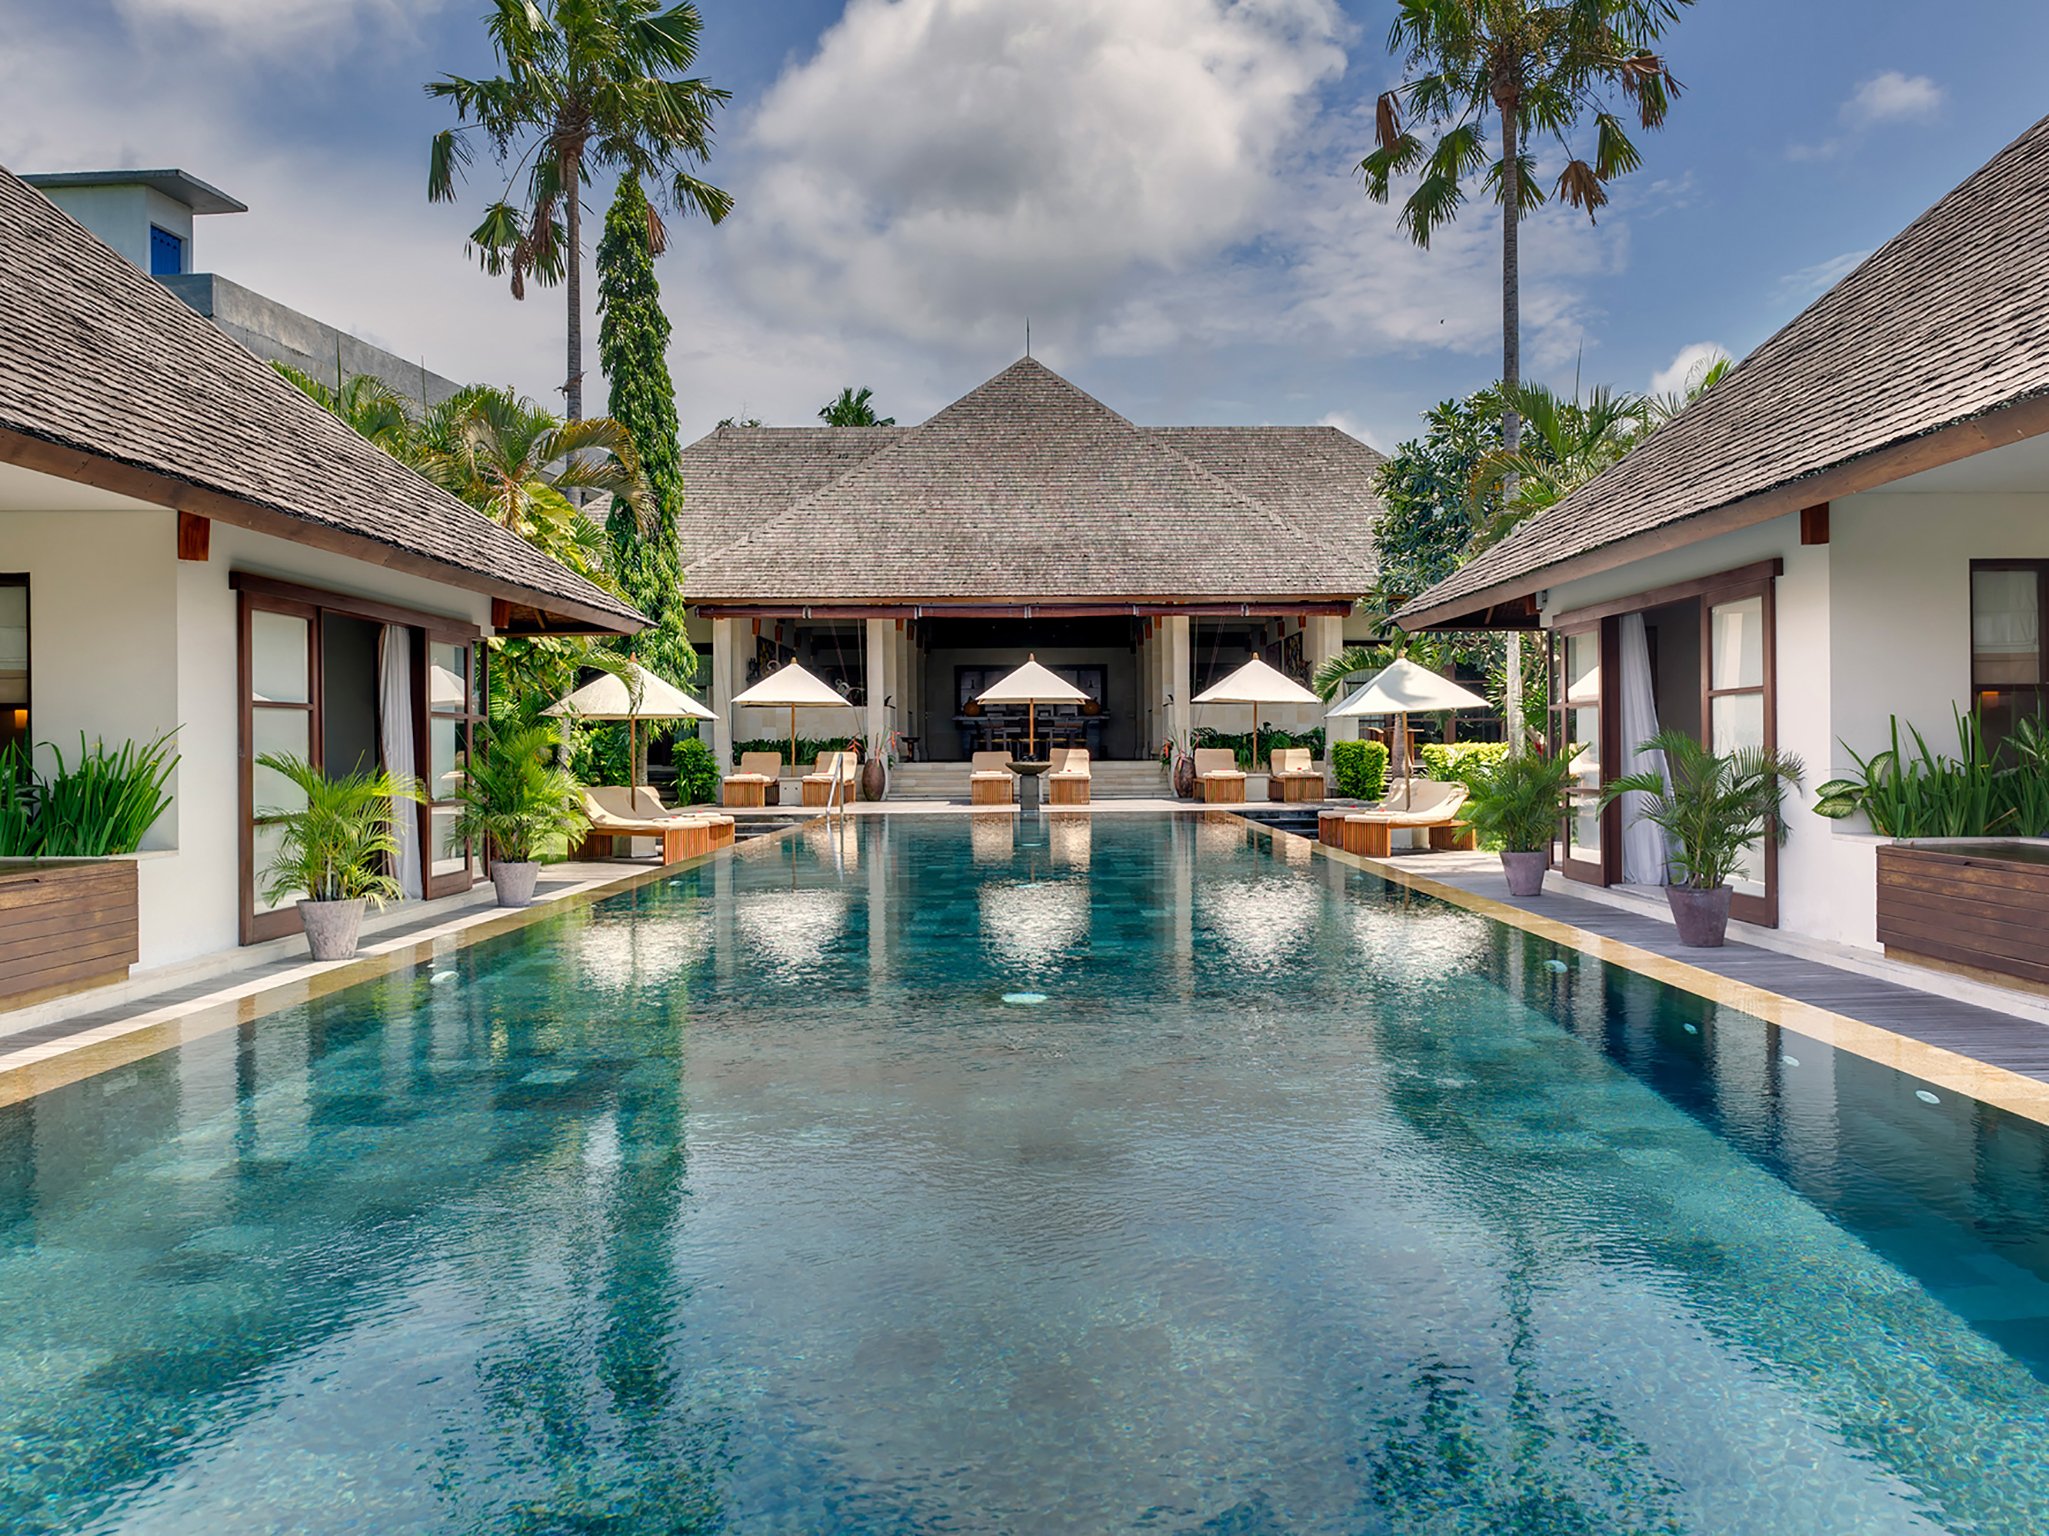 Luxurious Accommodation, Image from Mandalay Villa website